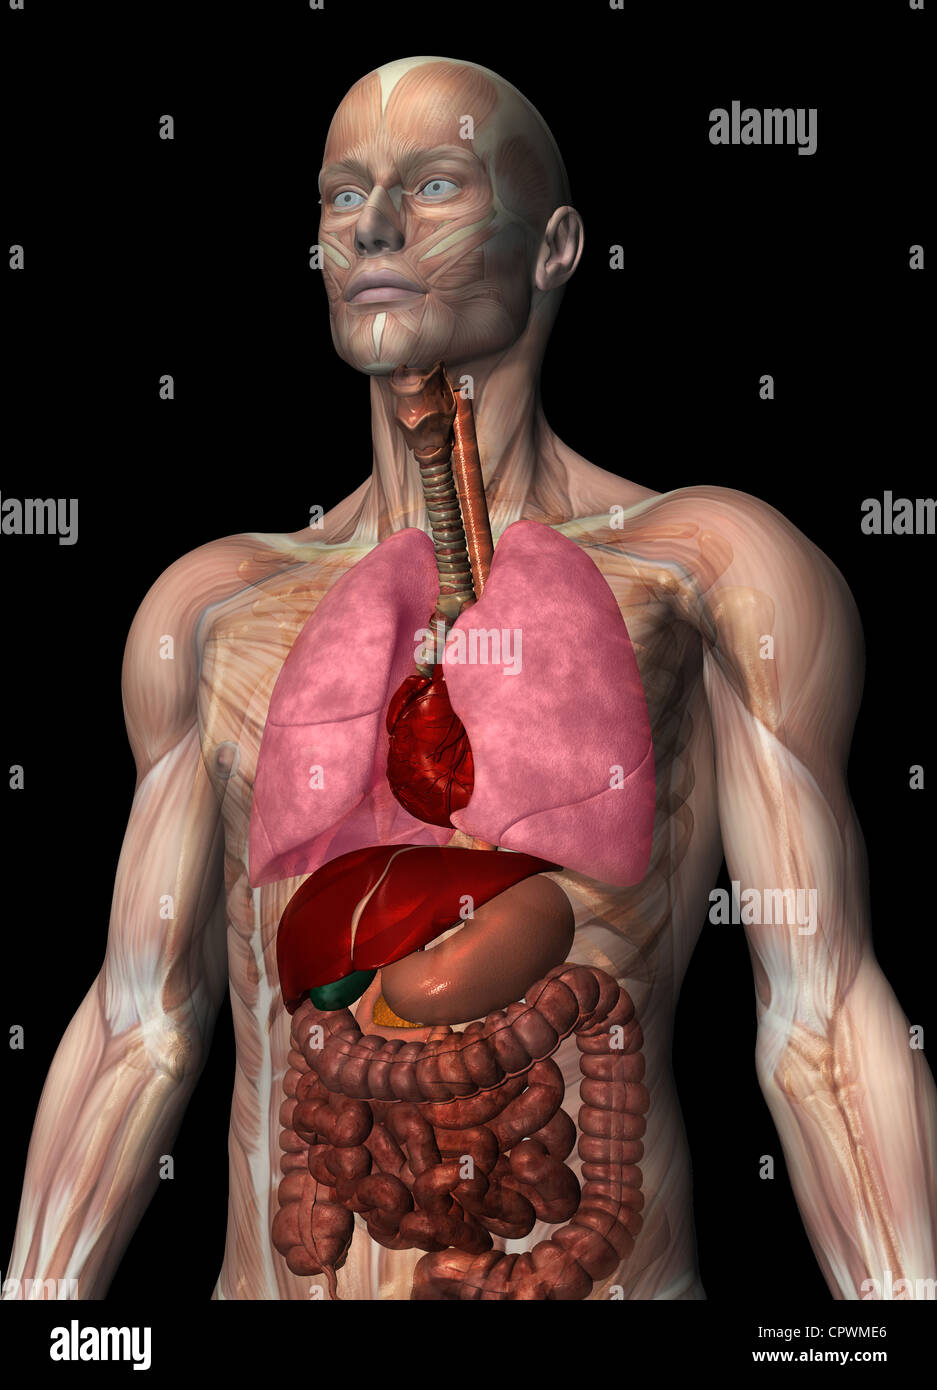 Anatomical illustration of the human body Stock Photo